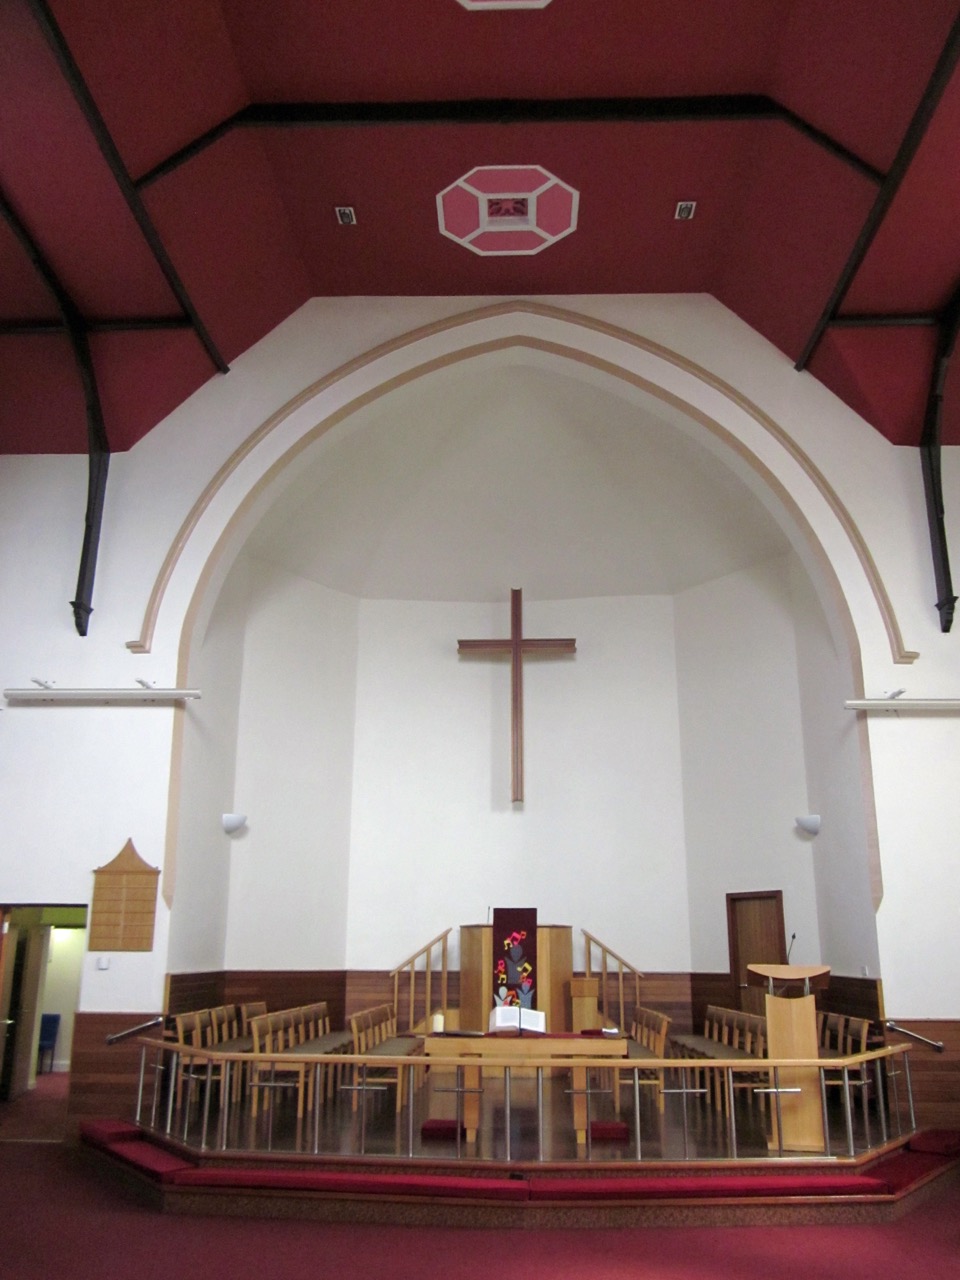 Methodist Church, interior view